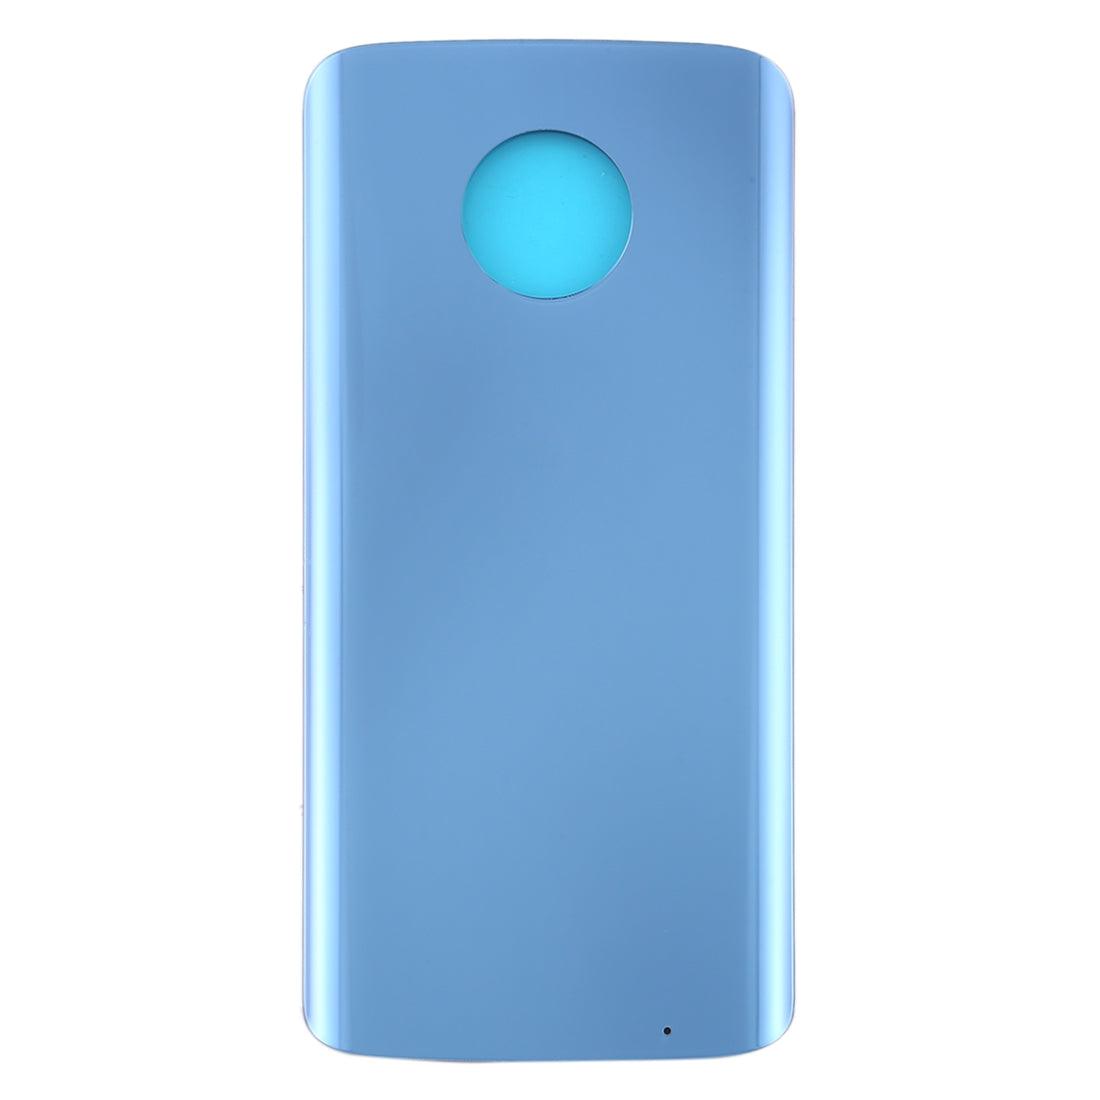 Back Glass Panel Housing Body for Motorola Moto G6 Sky Blue with Camera Lens Module